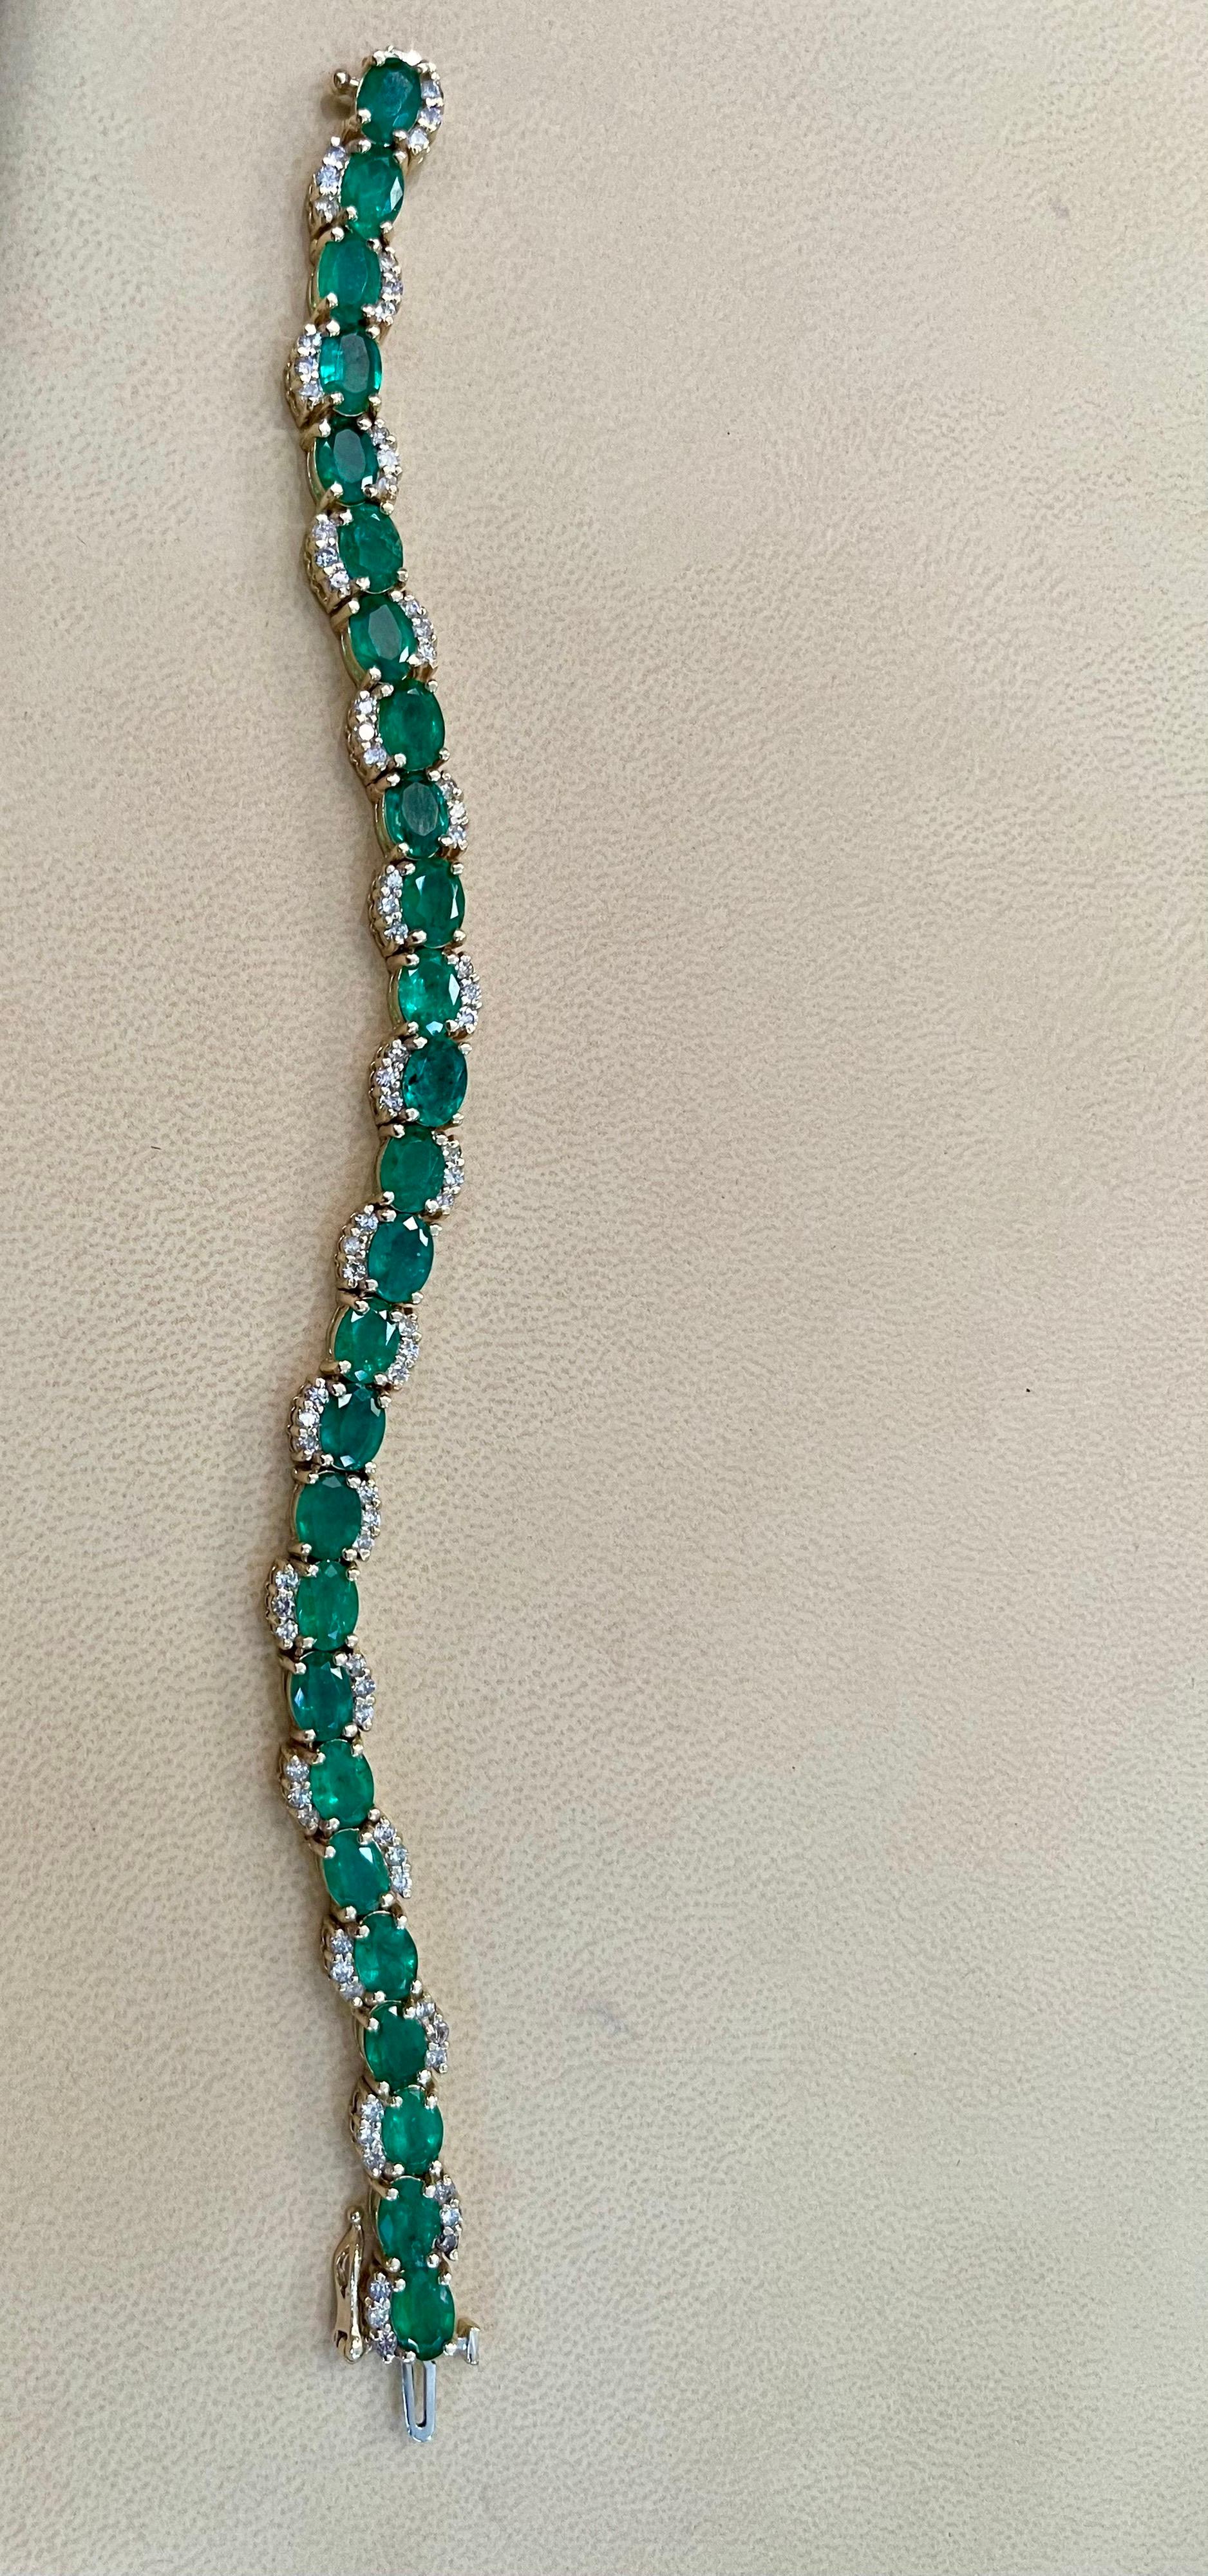 Oval Cut 21 Carat Natural Brazil Emerald & 2.6 Ct Diamond Tennis Bracelet 14 Karat Y Gold For Sale